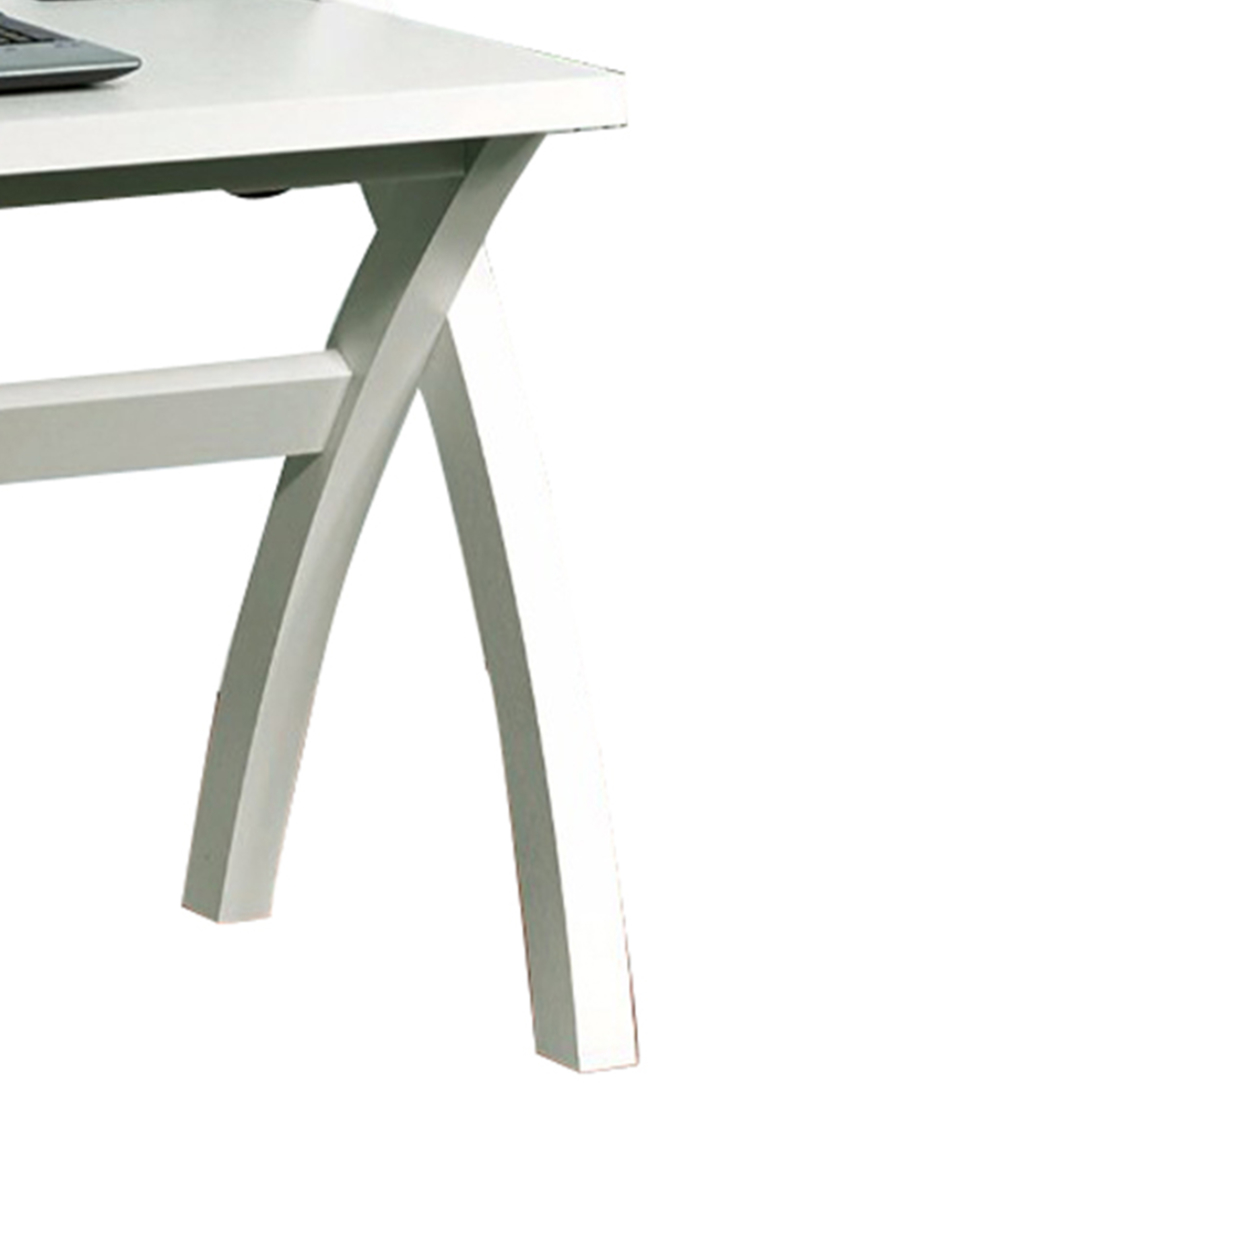 Sleek Contemporary Desk With Cross Legs, White- Saltoro Sherpi